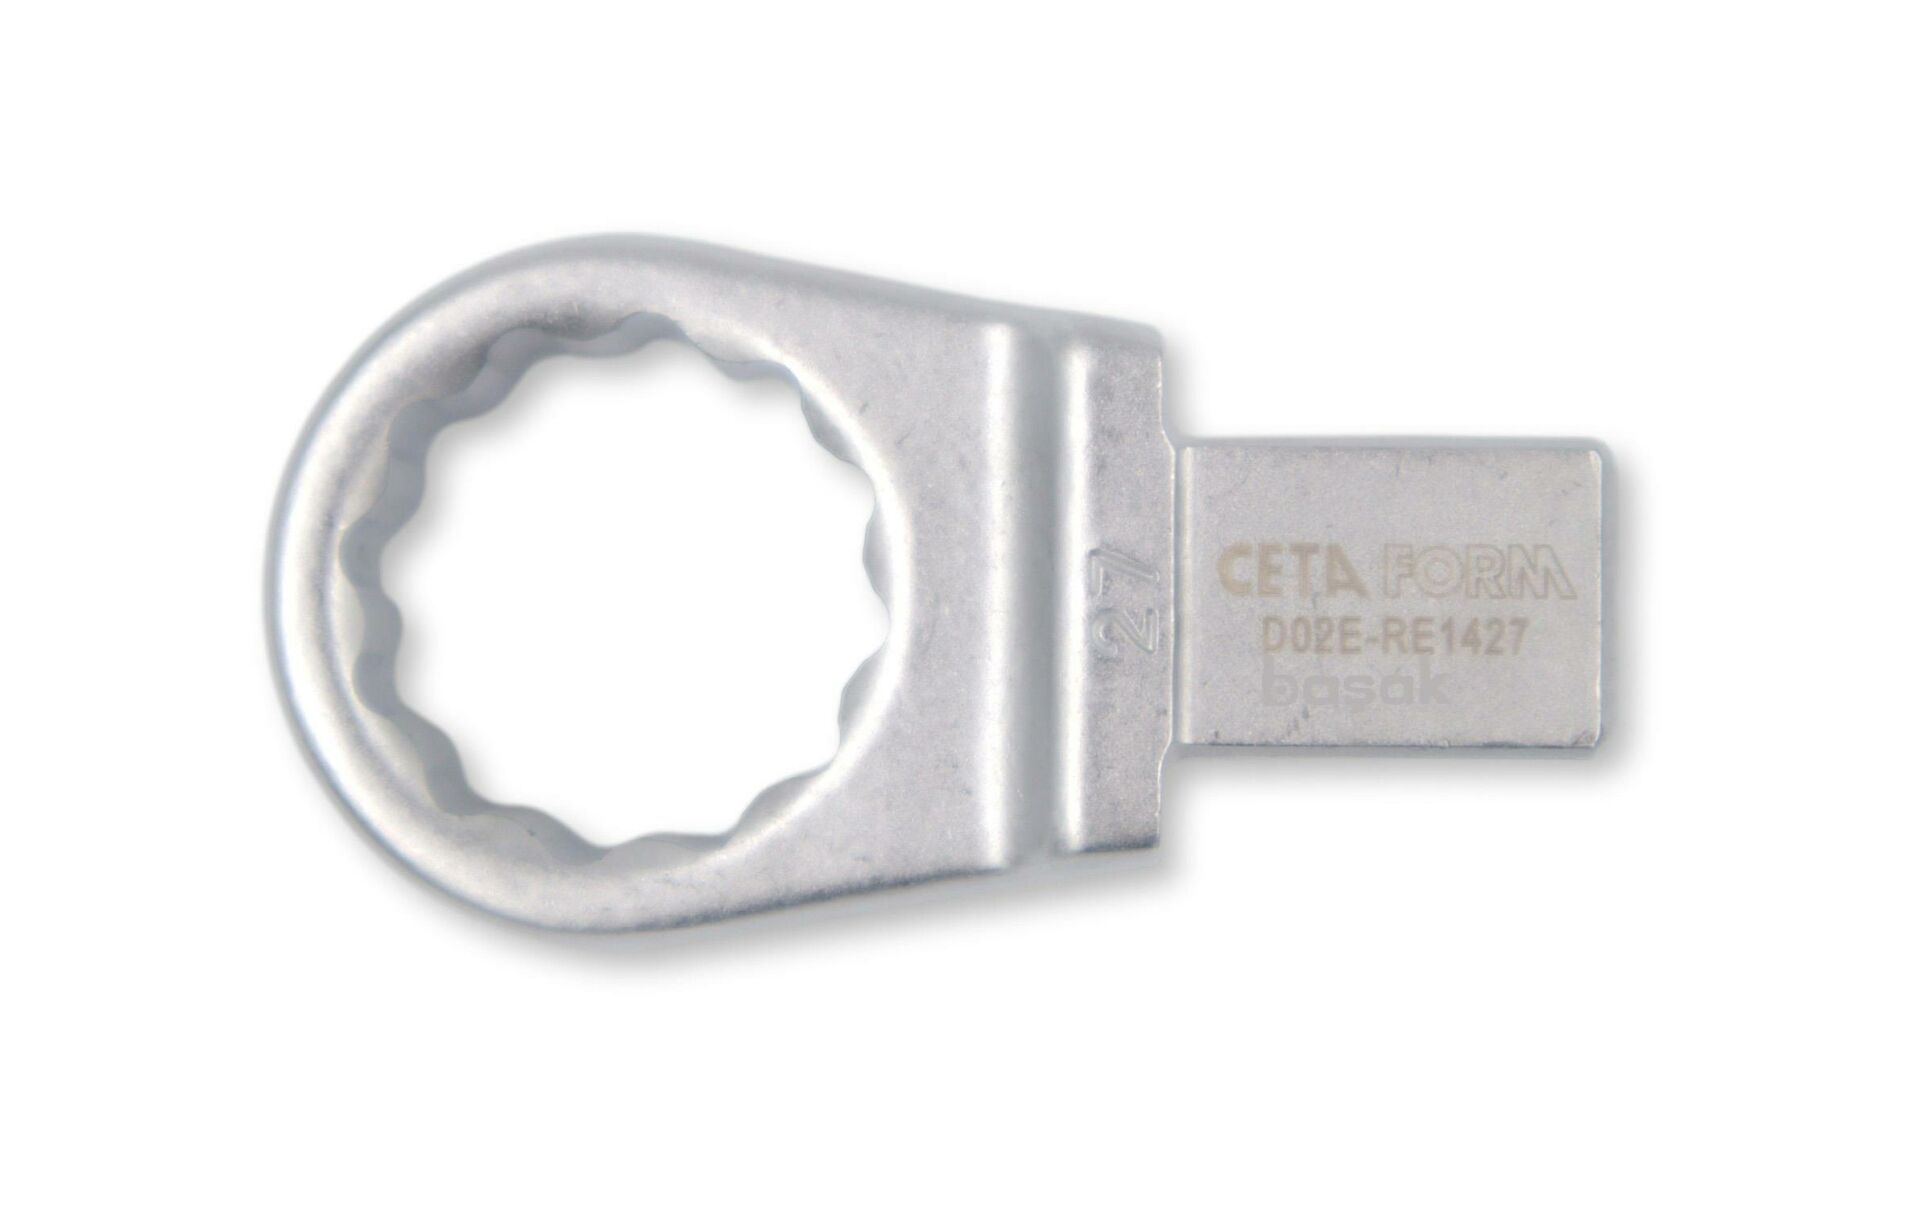 Ceta Form 27mm Yıldız Tork Anahtar Ucu (14x18mm) D02E-RE1427